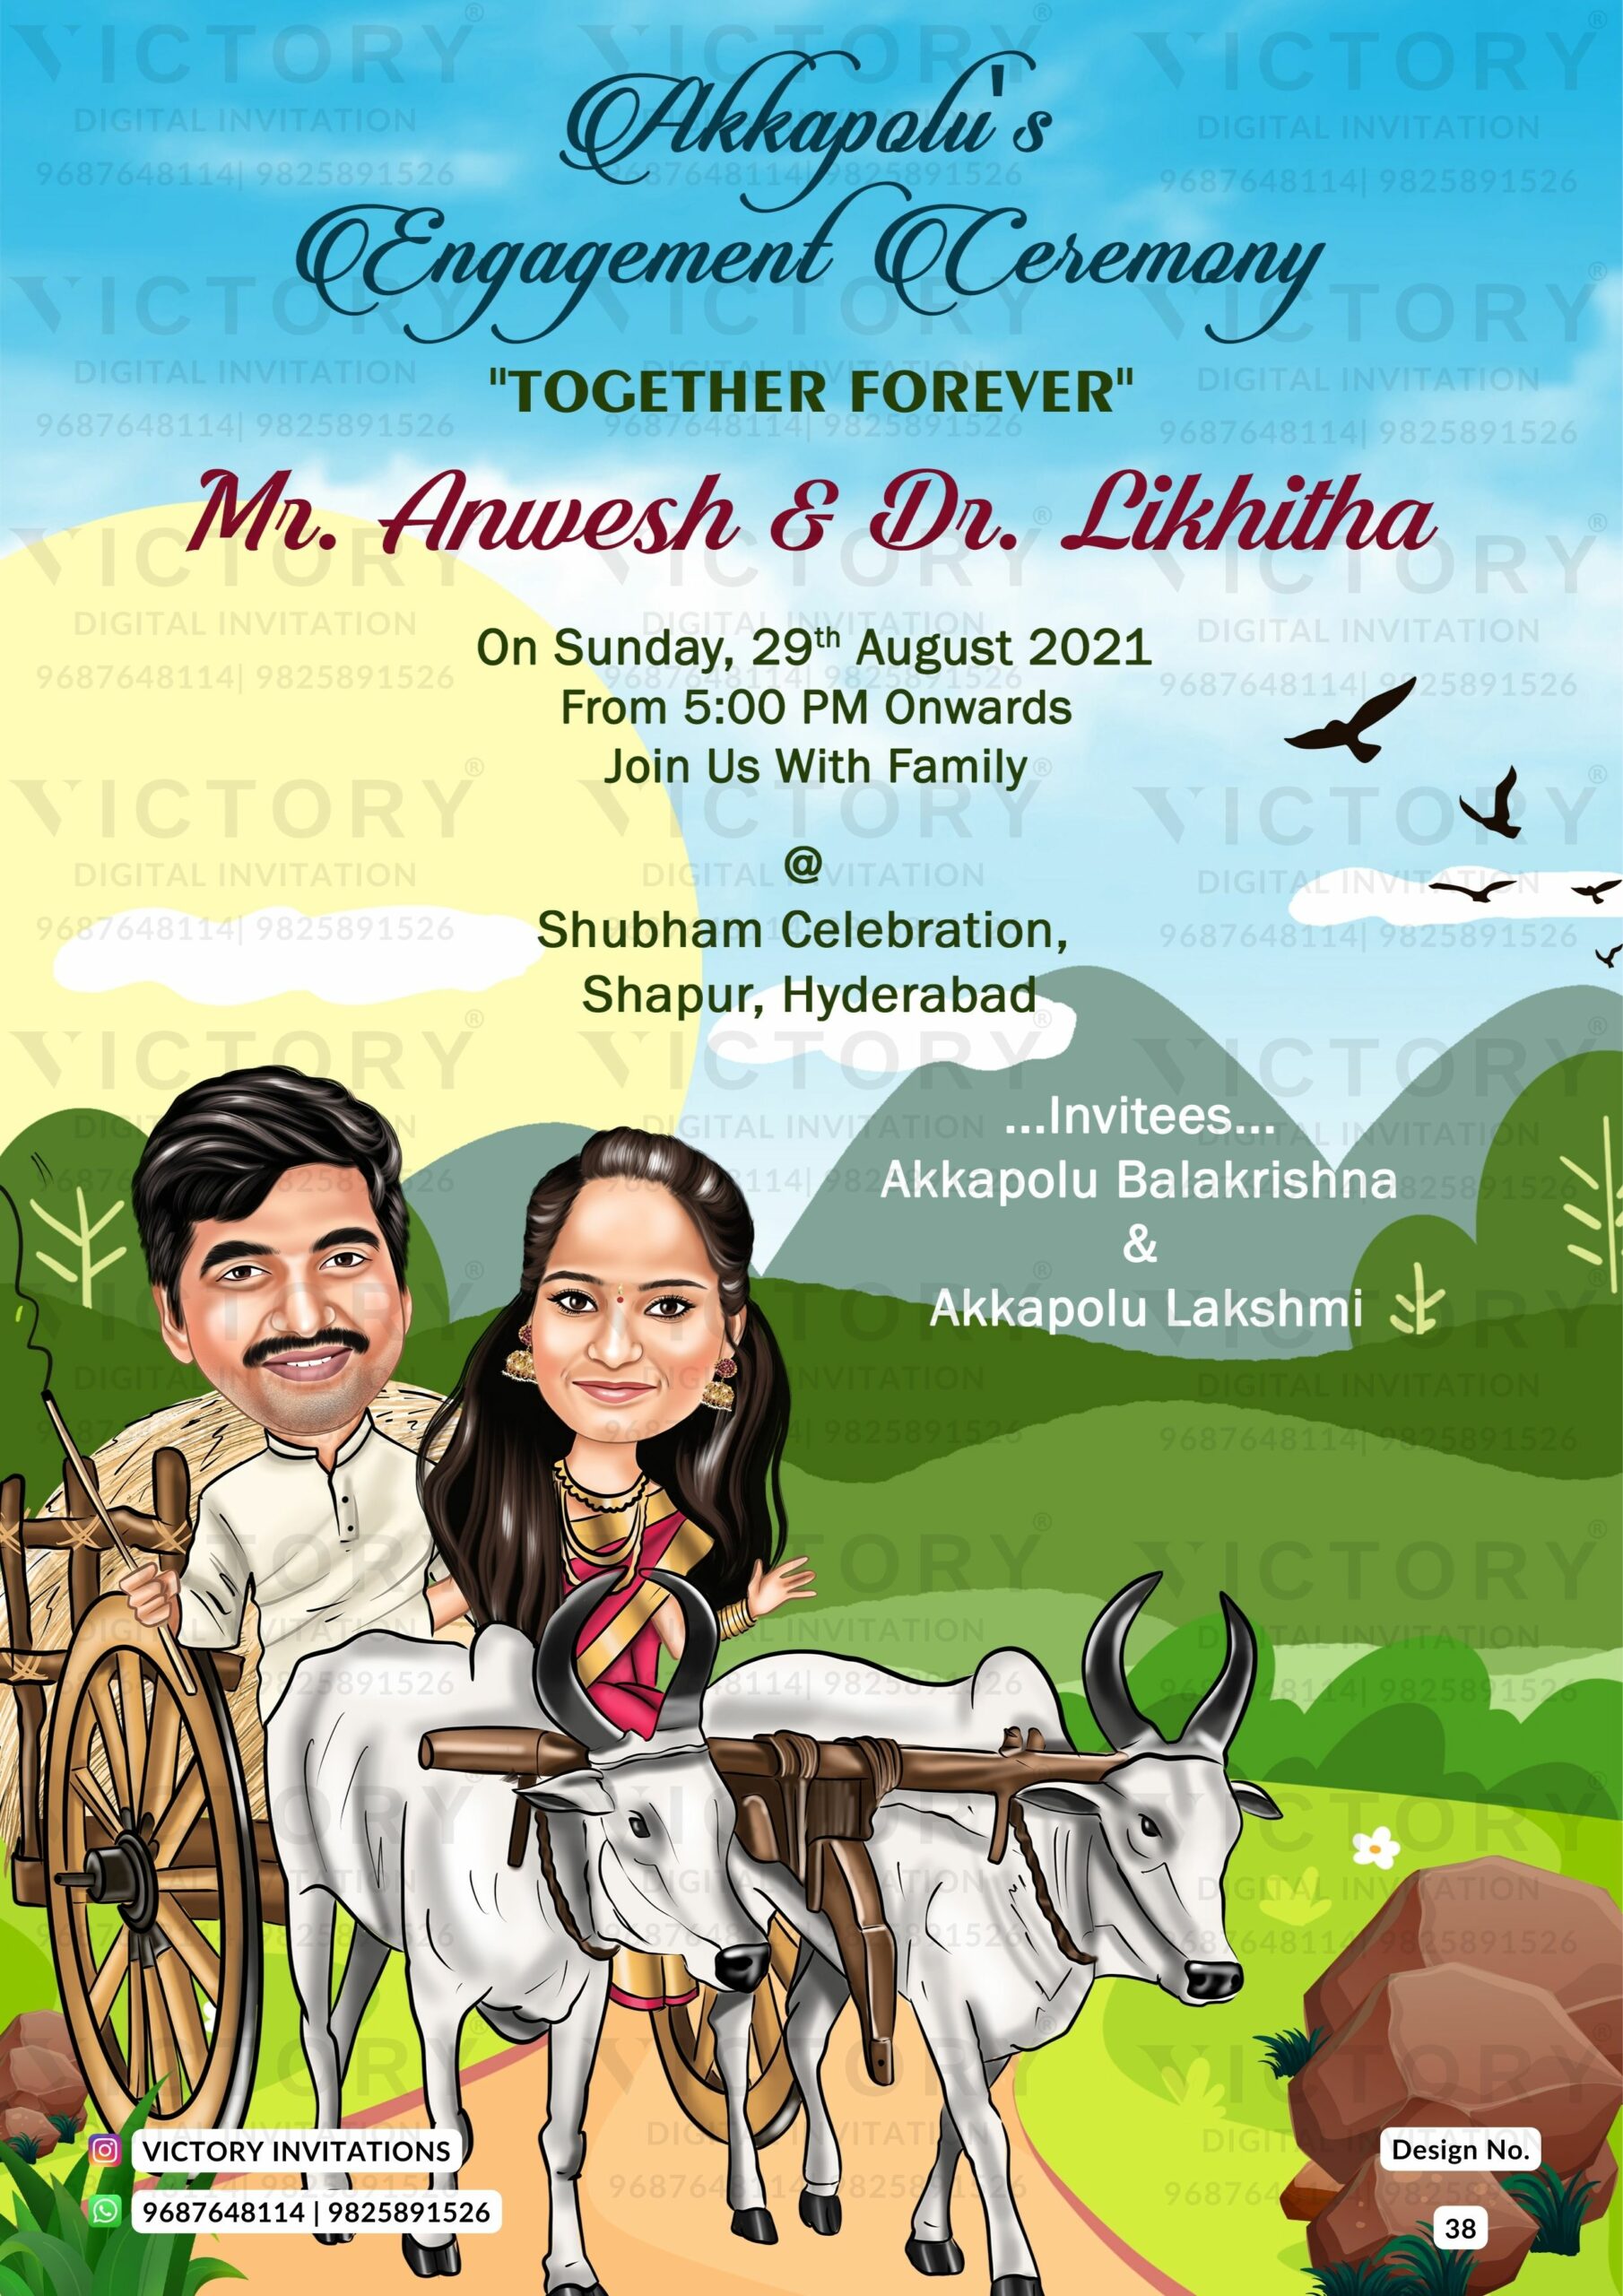 New Traditional Indian Caricature Wedding Invitation in English Language,  design no. 38 